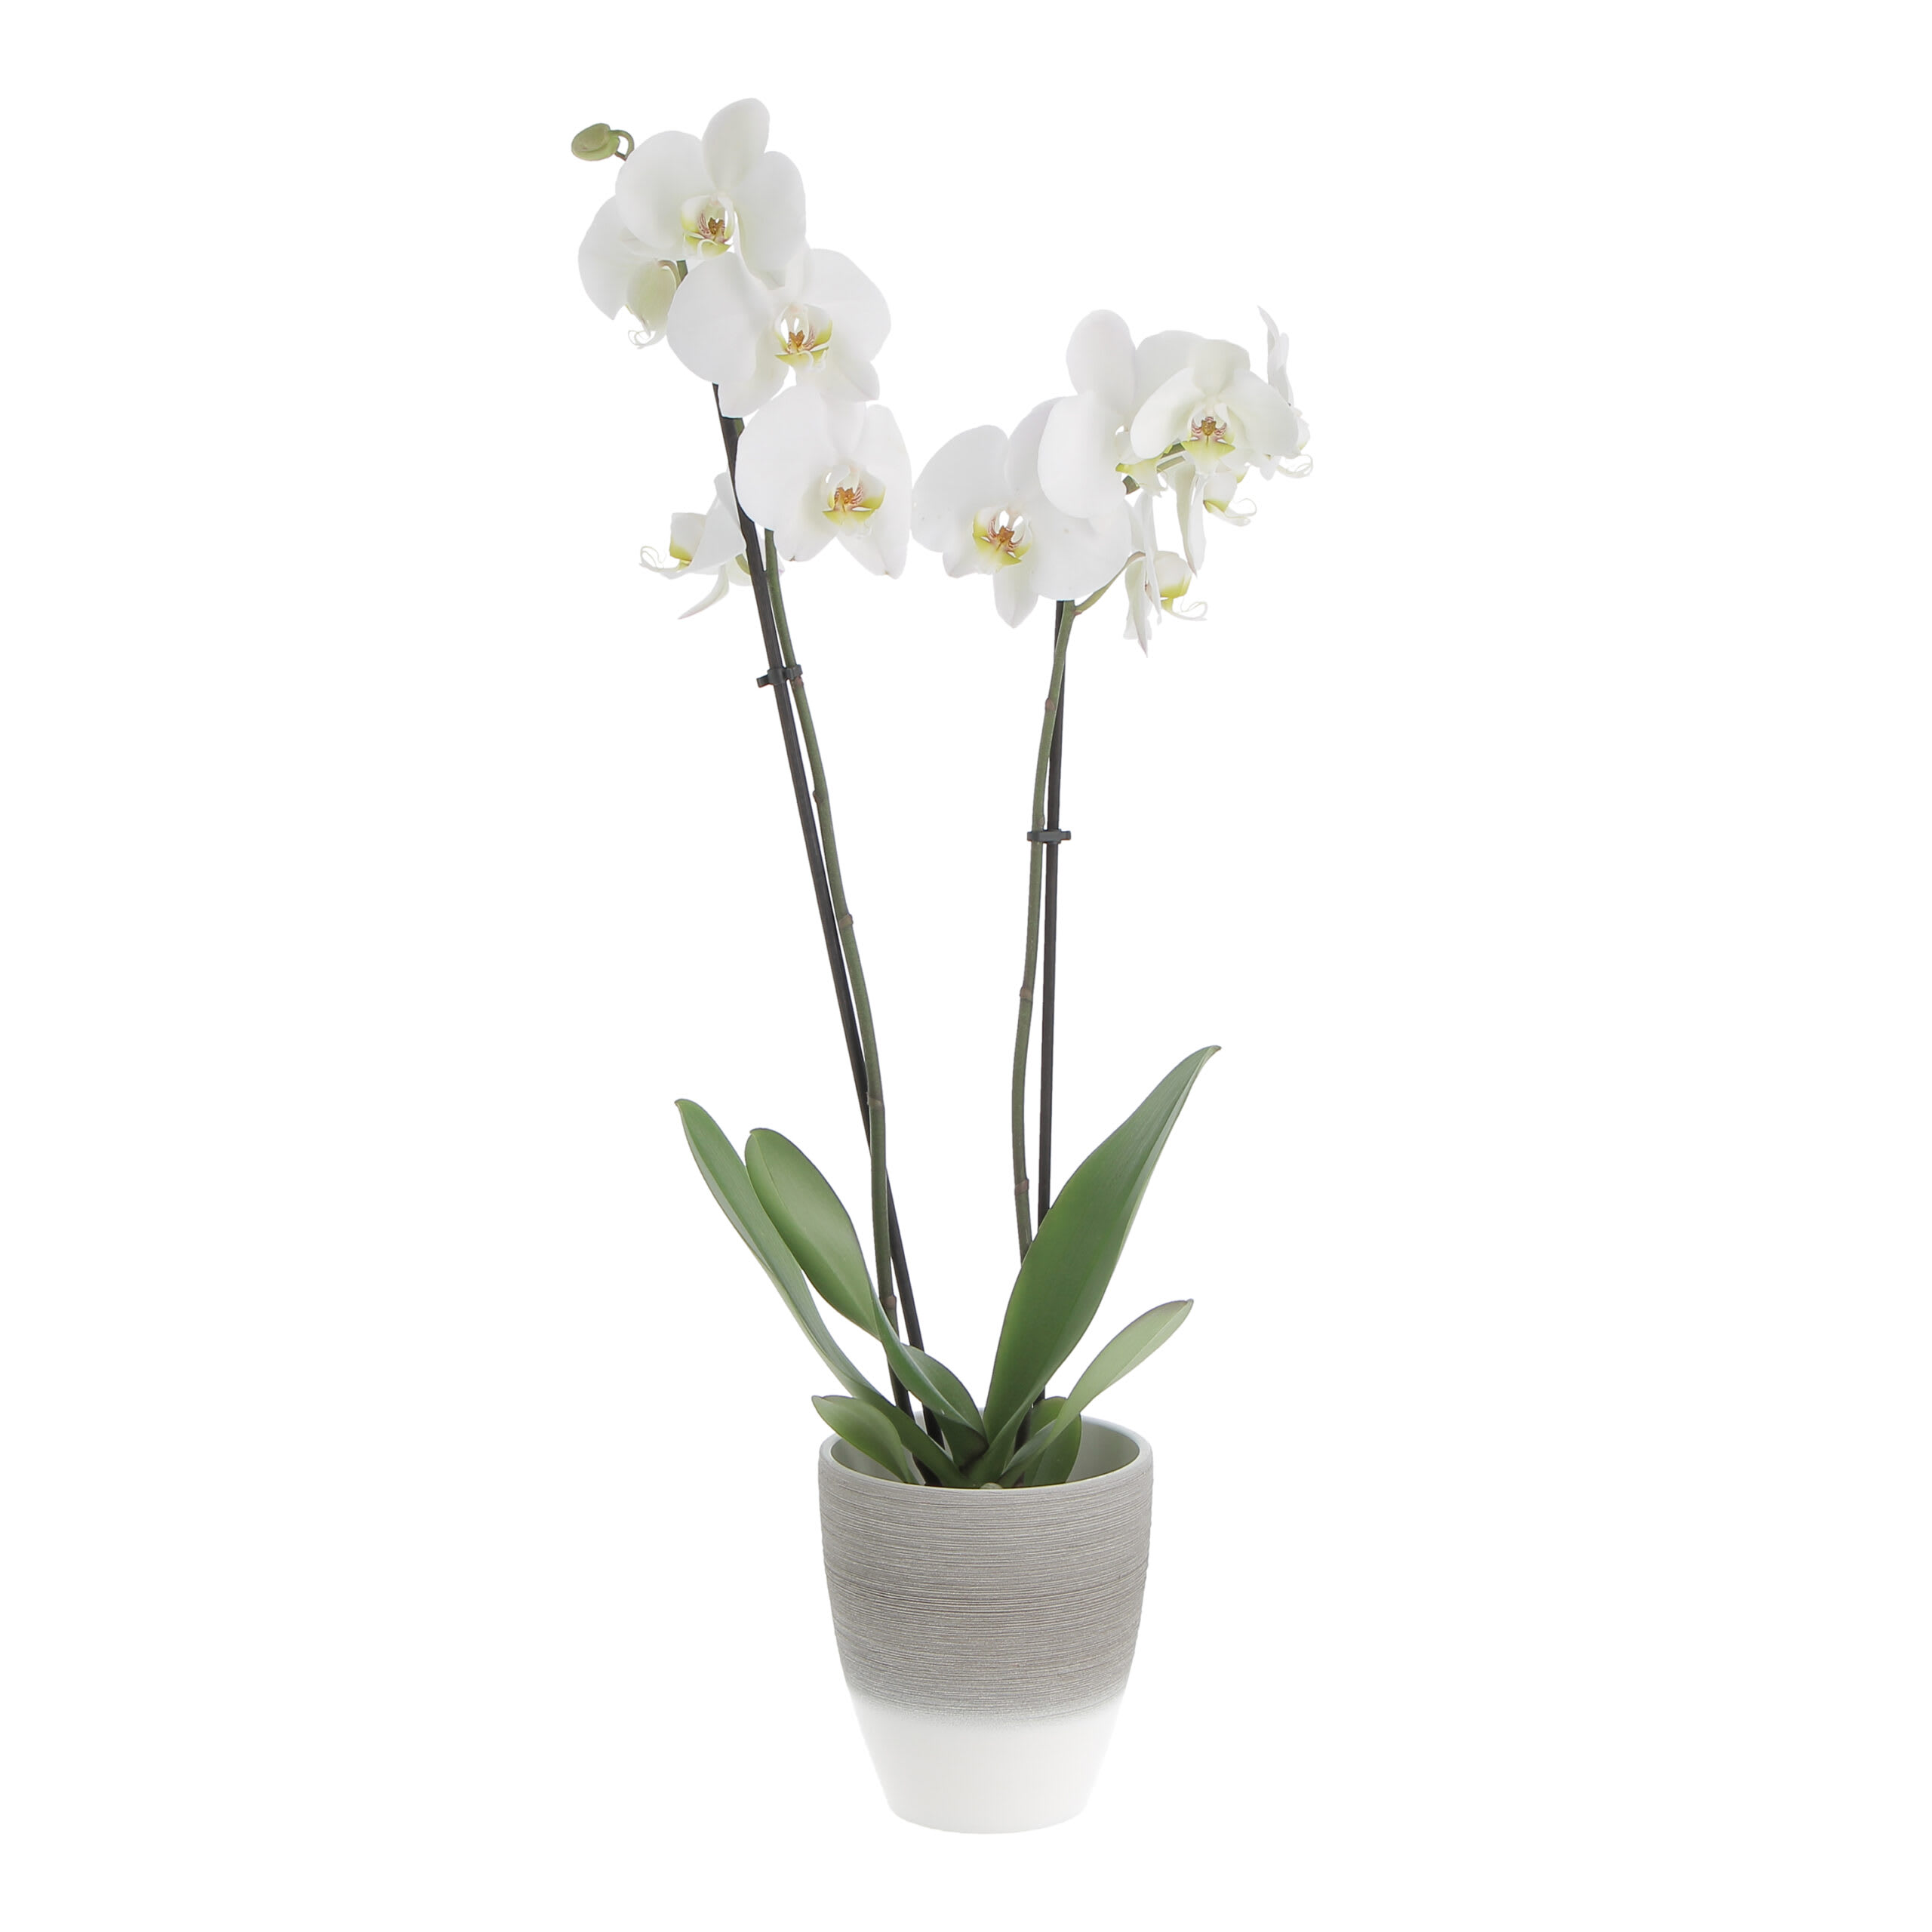 https://medias.maisonsdumonde.com/images/f_auto,q_auto/v1/mkp/M22175712_1/orchidea-phalaenopsis-bianca-pianta-vera-h-60-70-cm-vaso-oe-12-cm.jpg